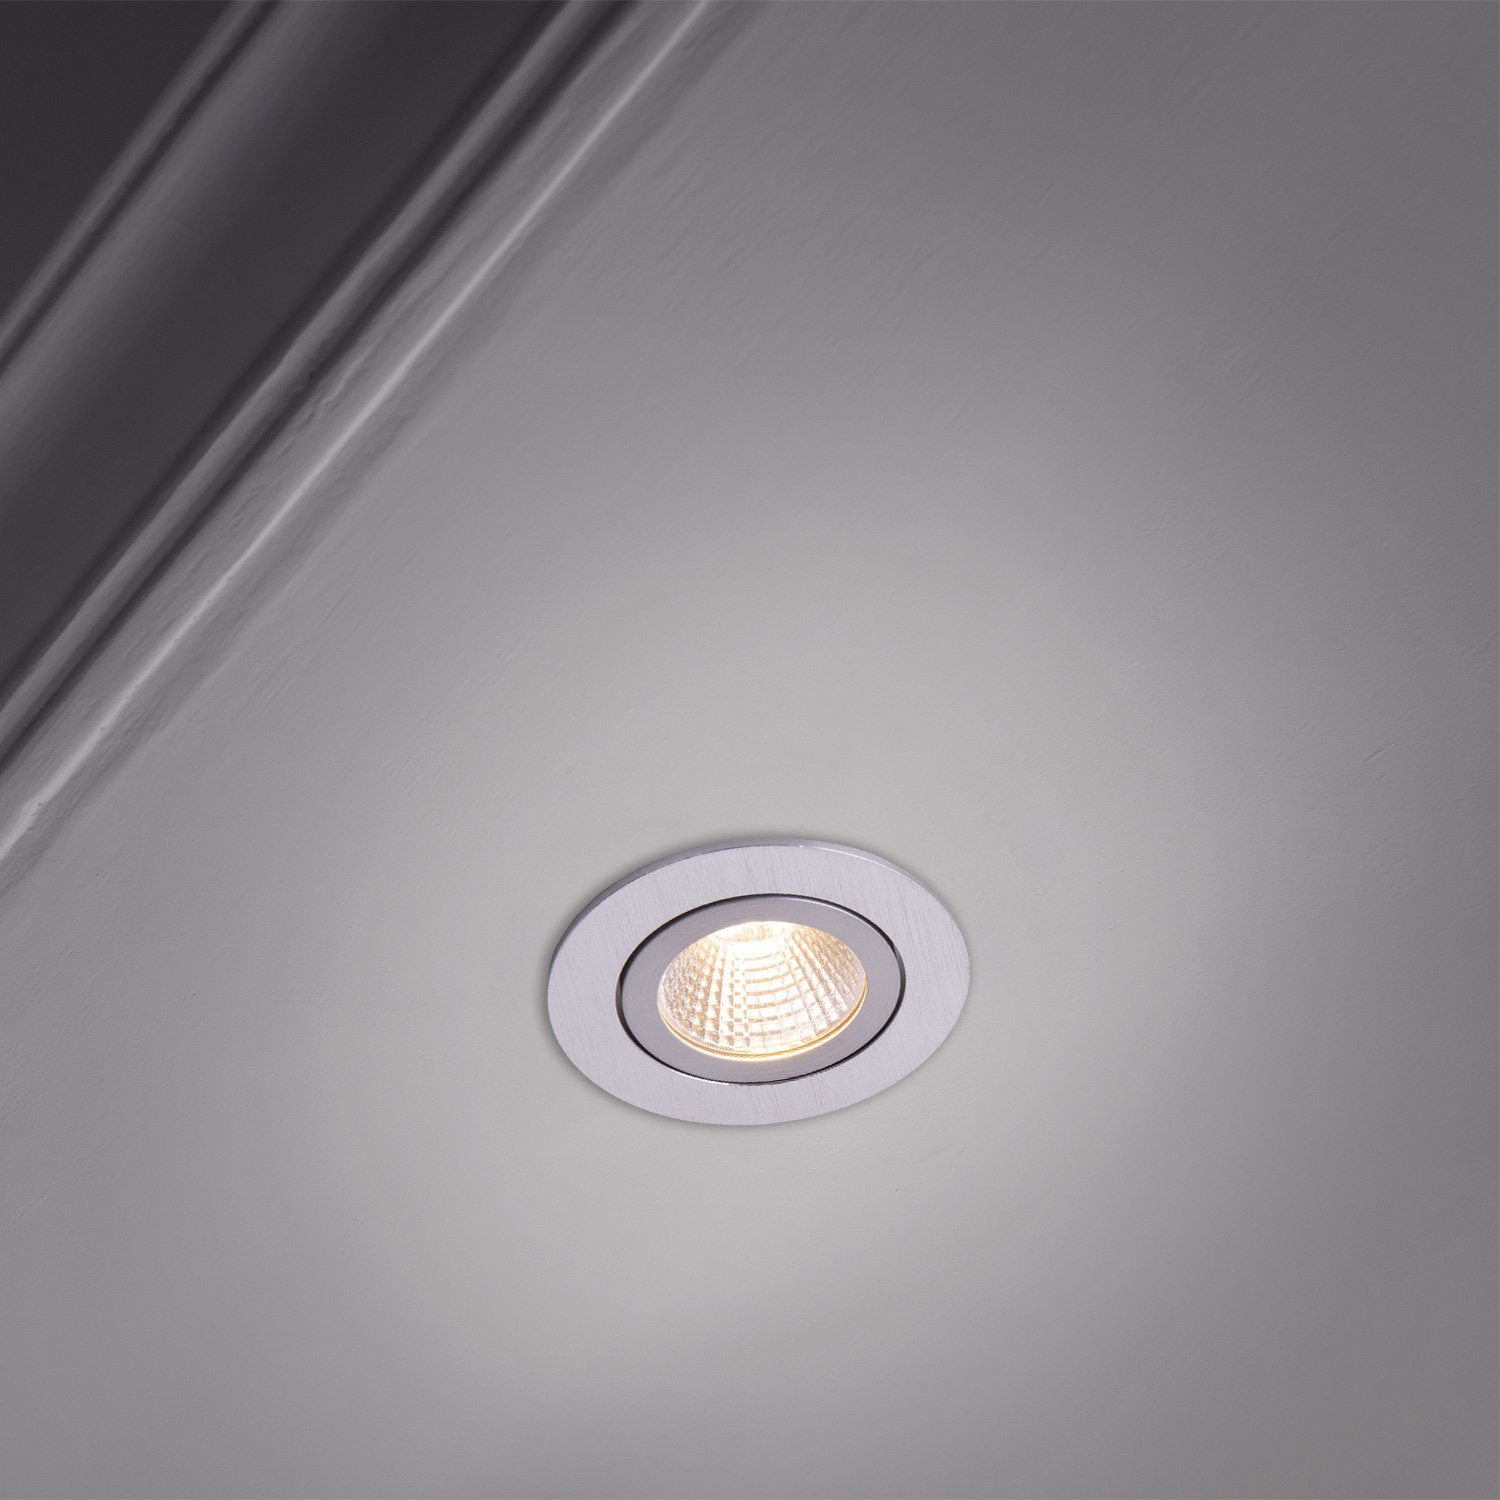 Paco Home Einbauleuchte Rita, LED Spotlight Strahler Flach LED Warmweiß, wechselbar, LED dimmbar Einbaustrahler Schwenkbar